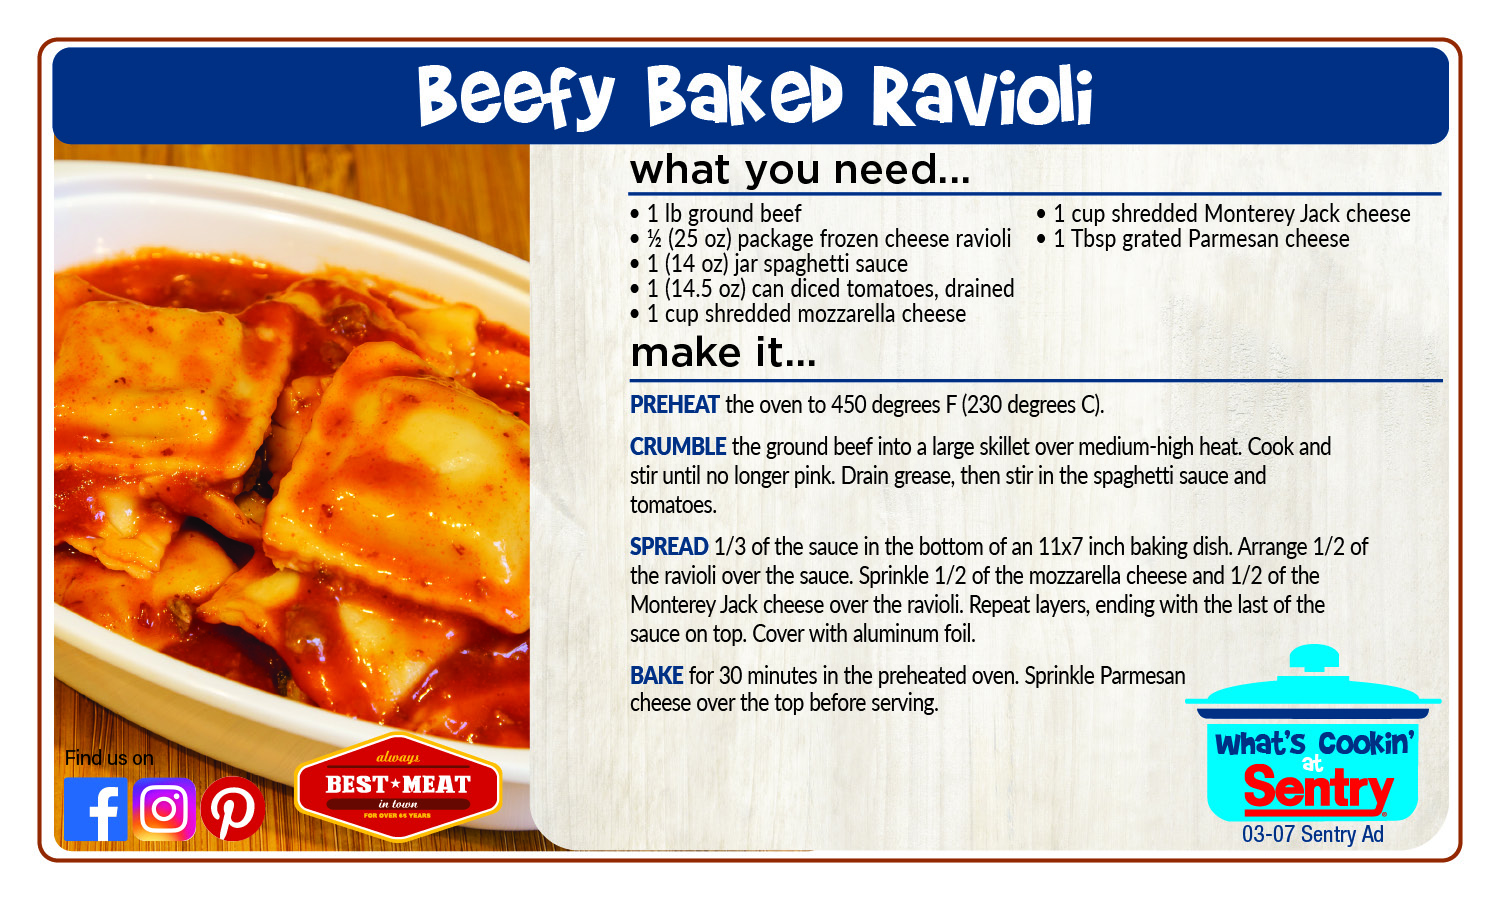 Beefy Baked Ravioli